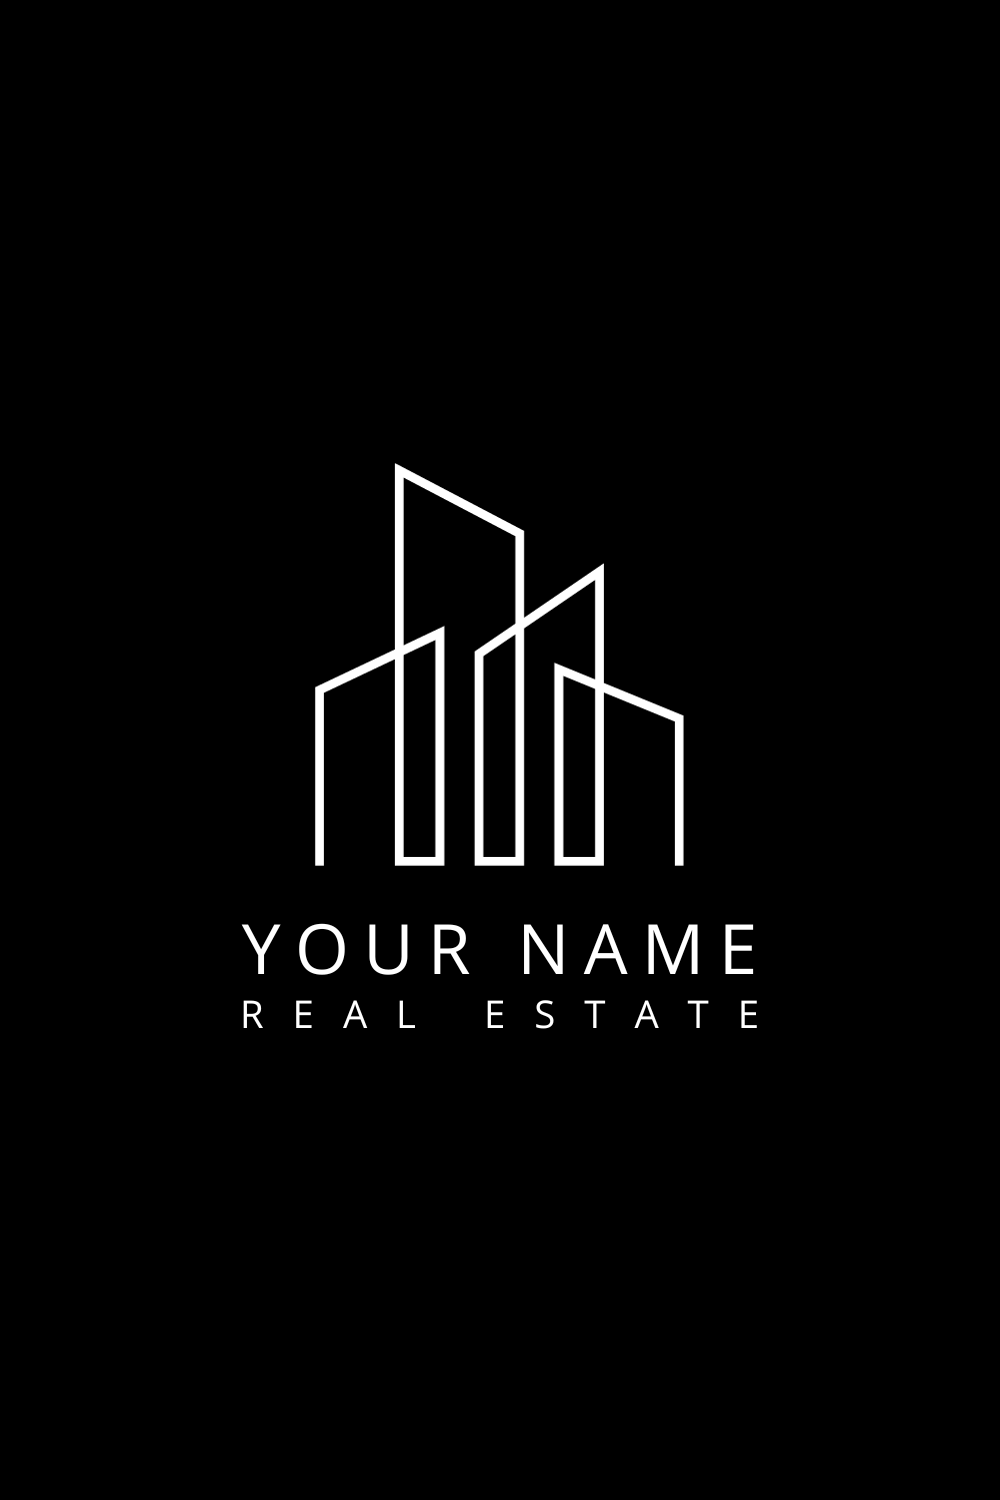 Real Estate Logo pinterest preview image.